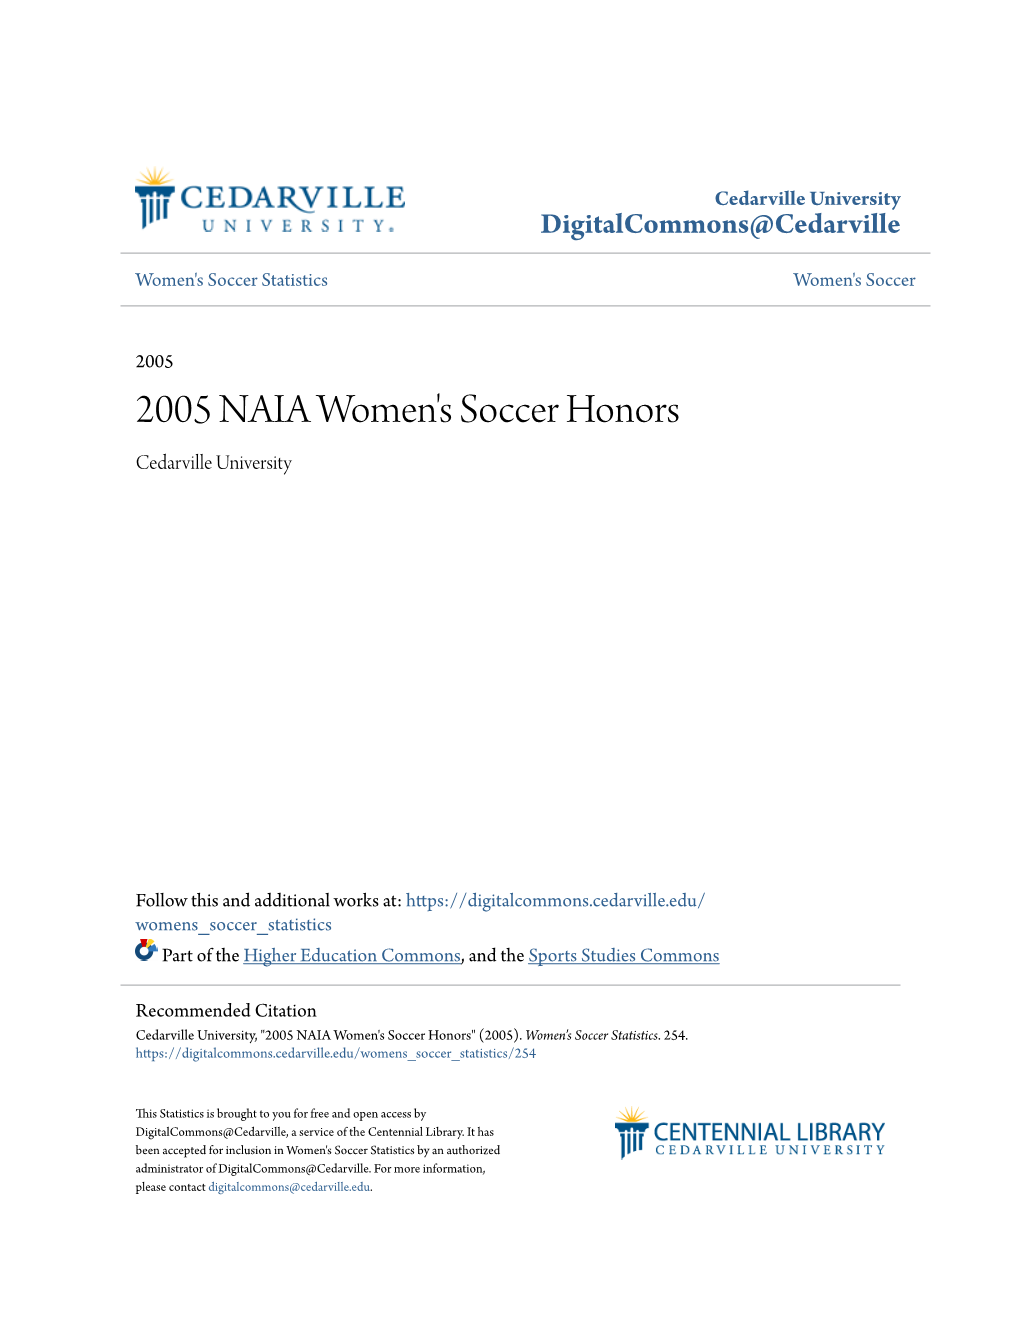 2005 NAIA Women's Soccer Honors Cedarville University